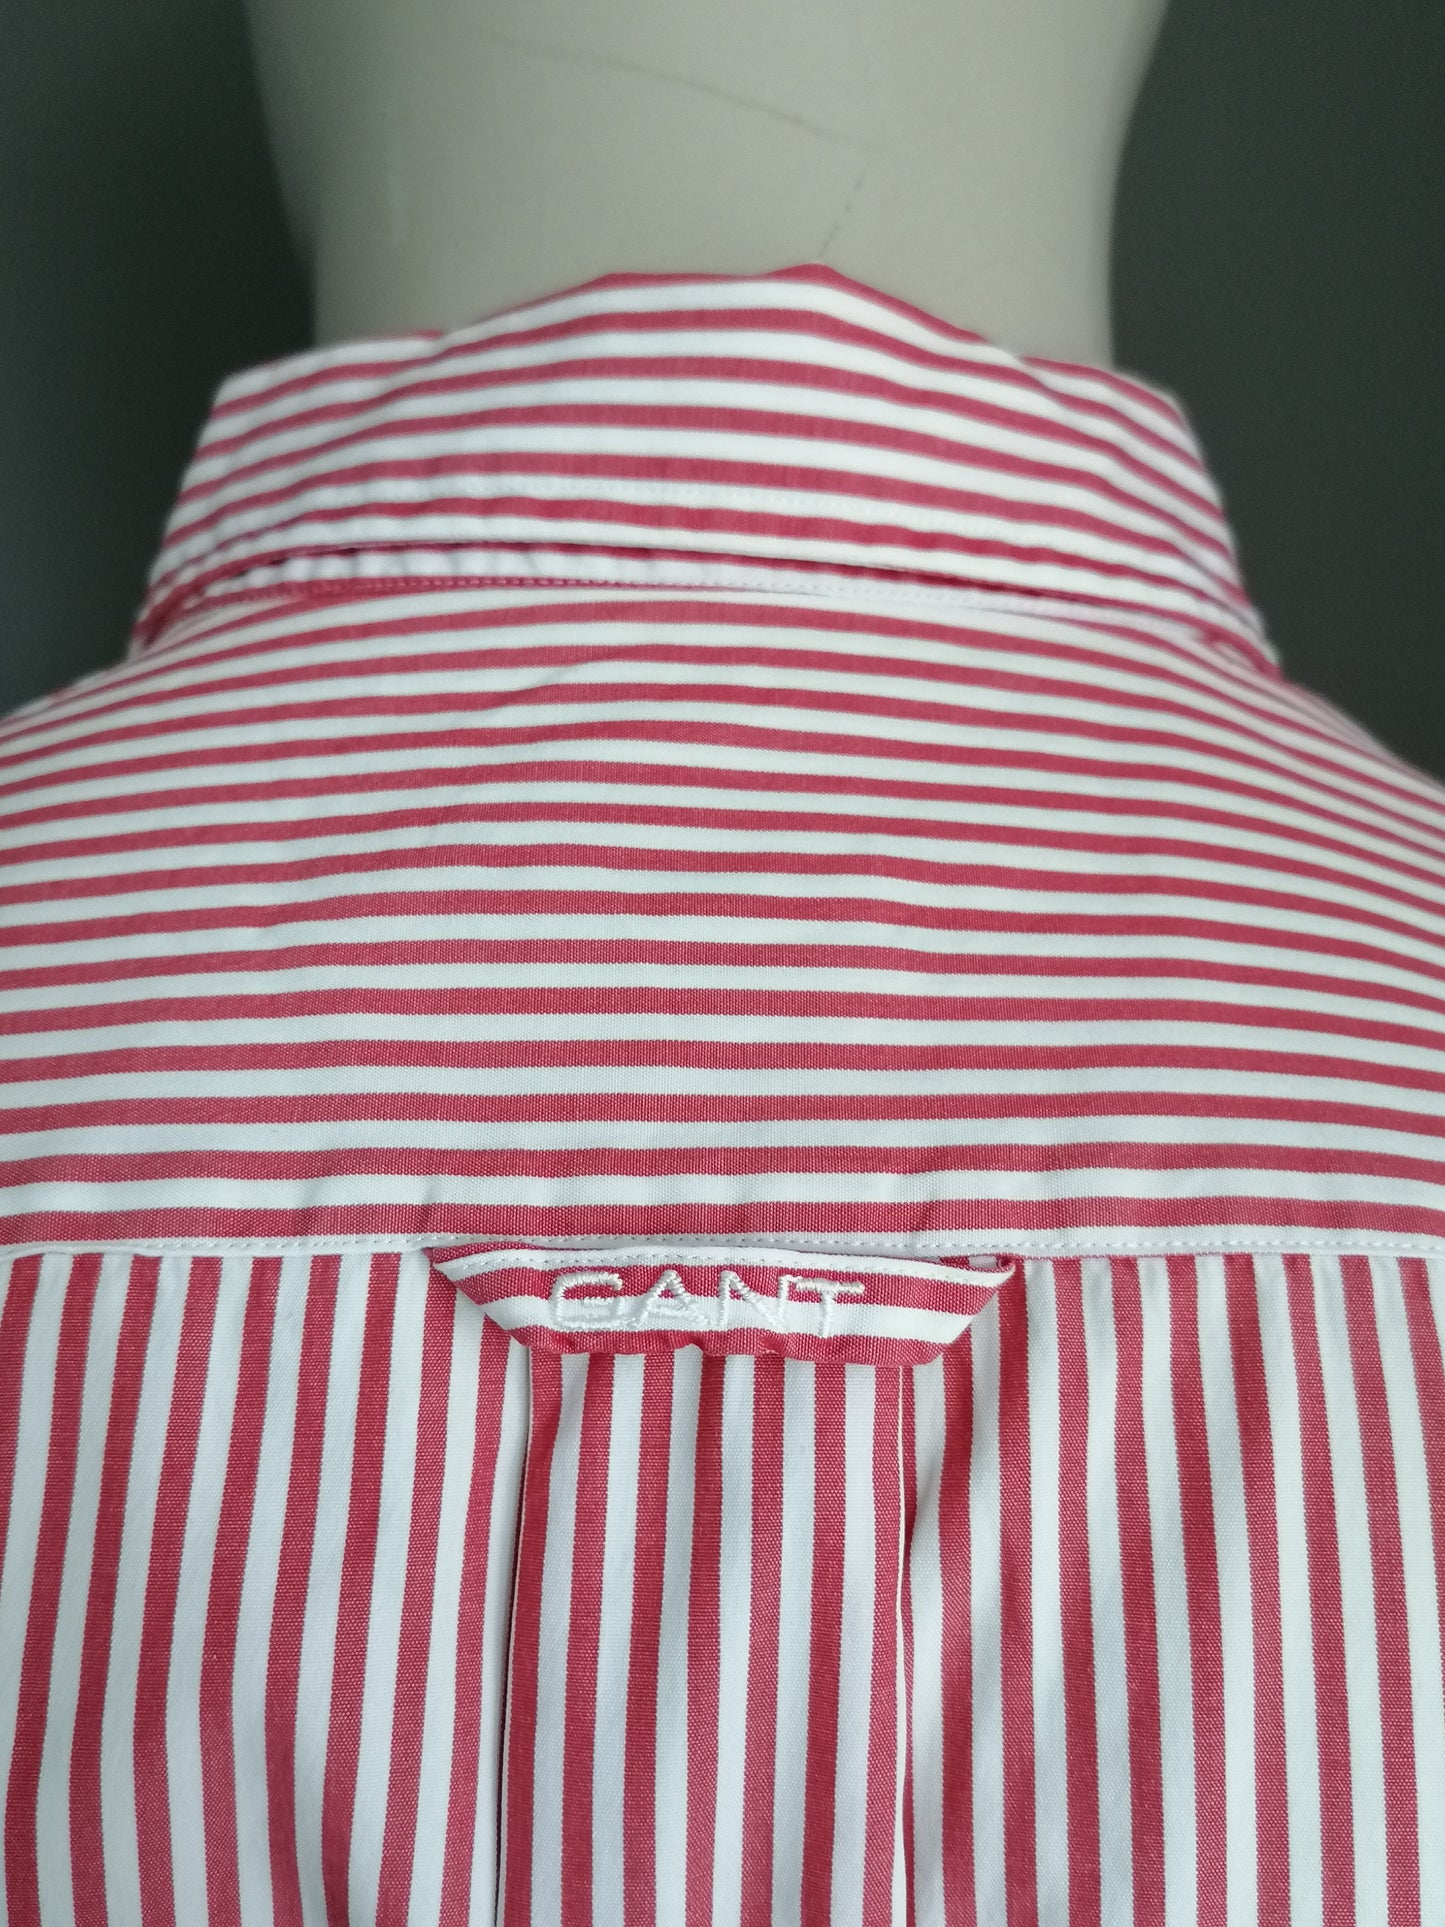 Gant shirt short sleeve. Red white striped. Size L. Type Liberty Bell Poplin. Regular fit.